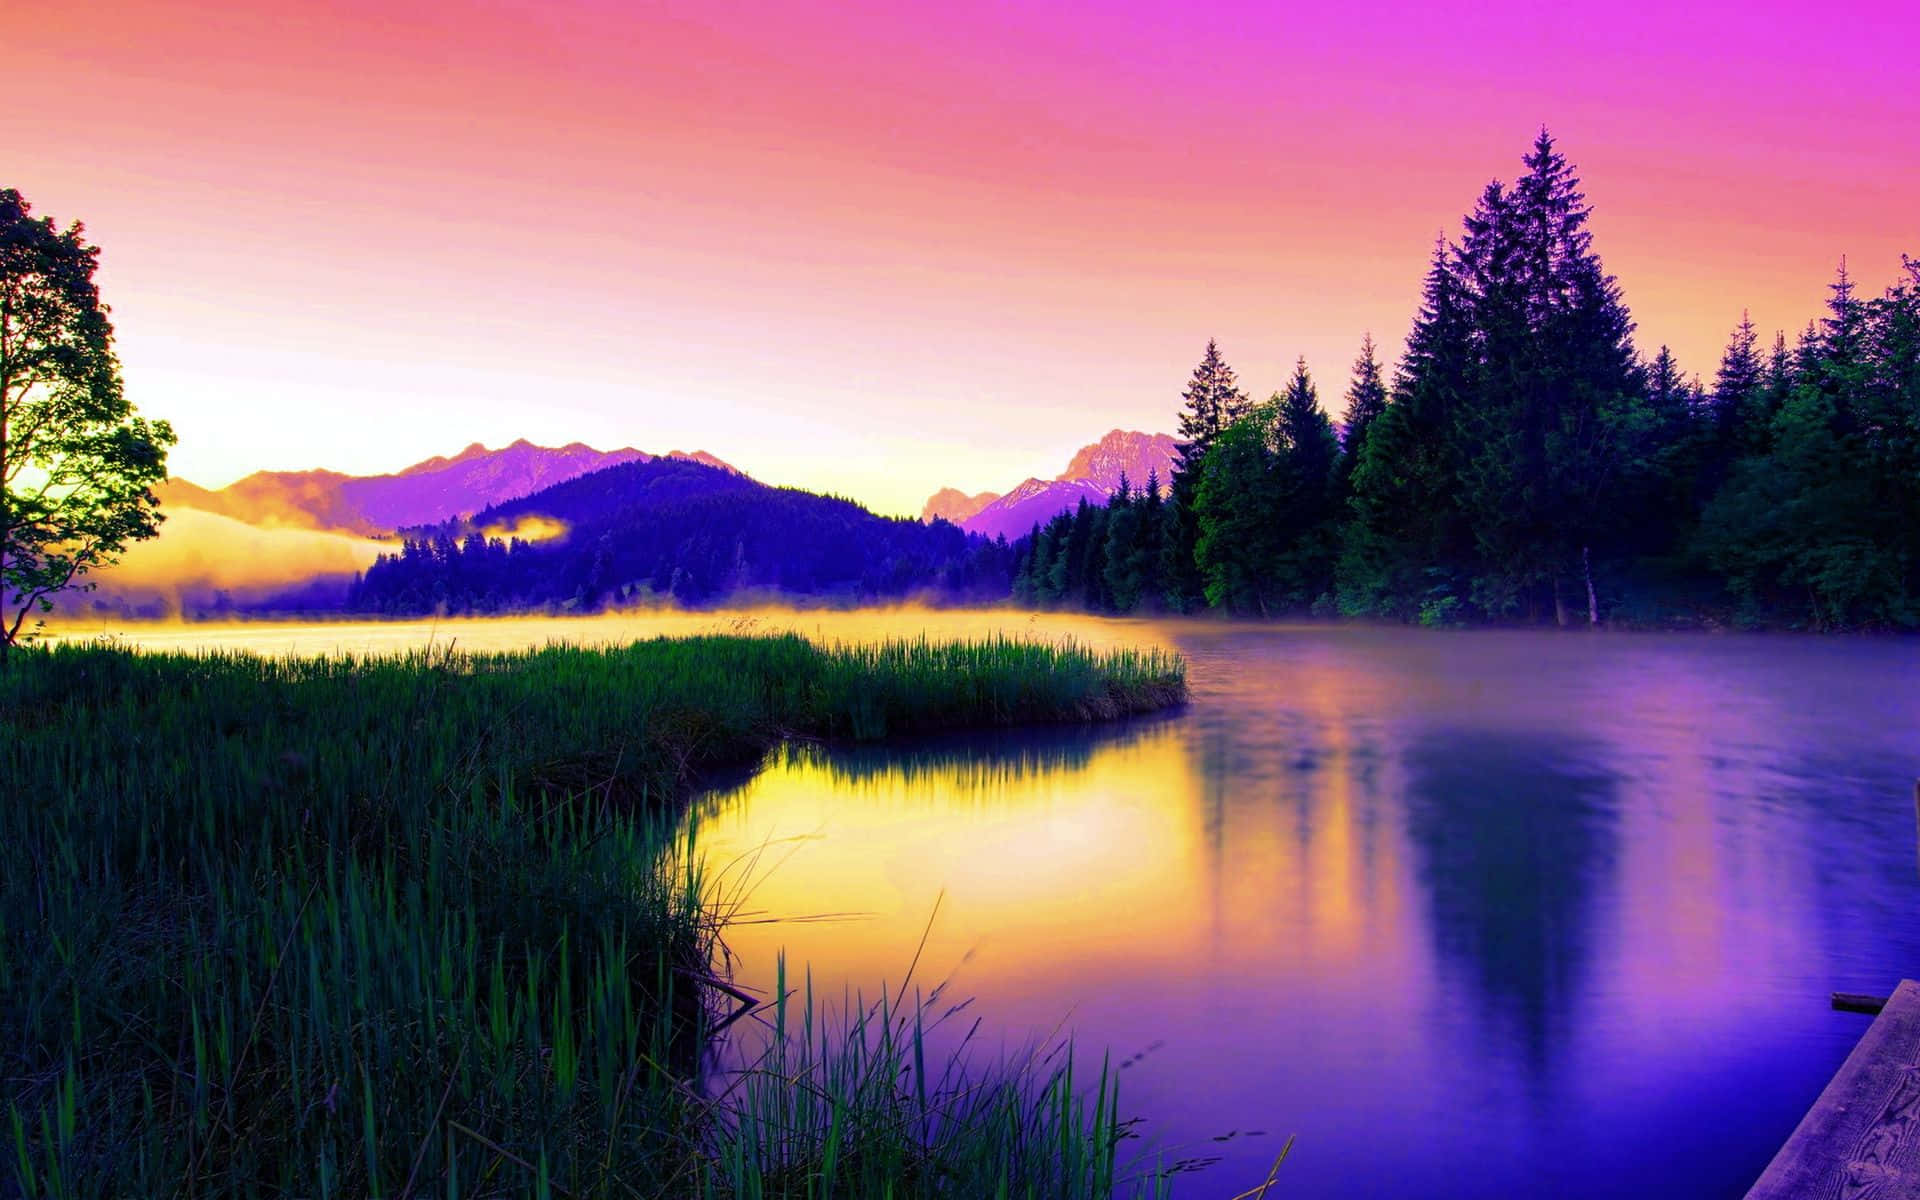 Refreshing waters glistening in the sun - Beautiful Lake Wallpaper